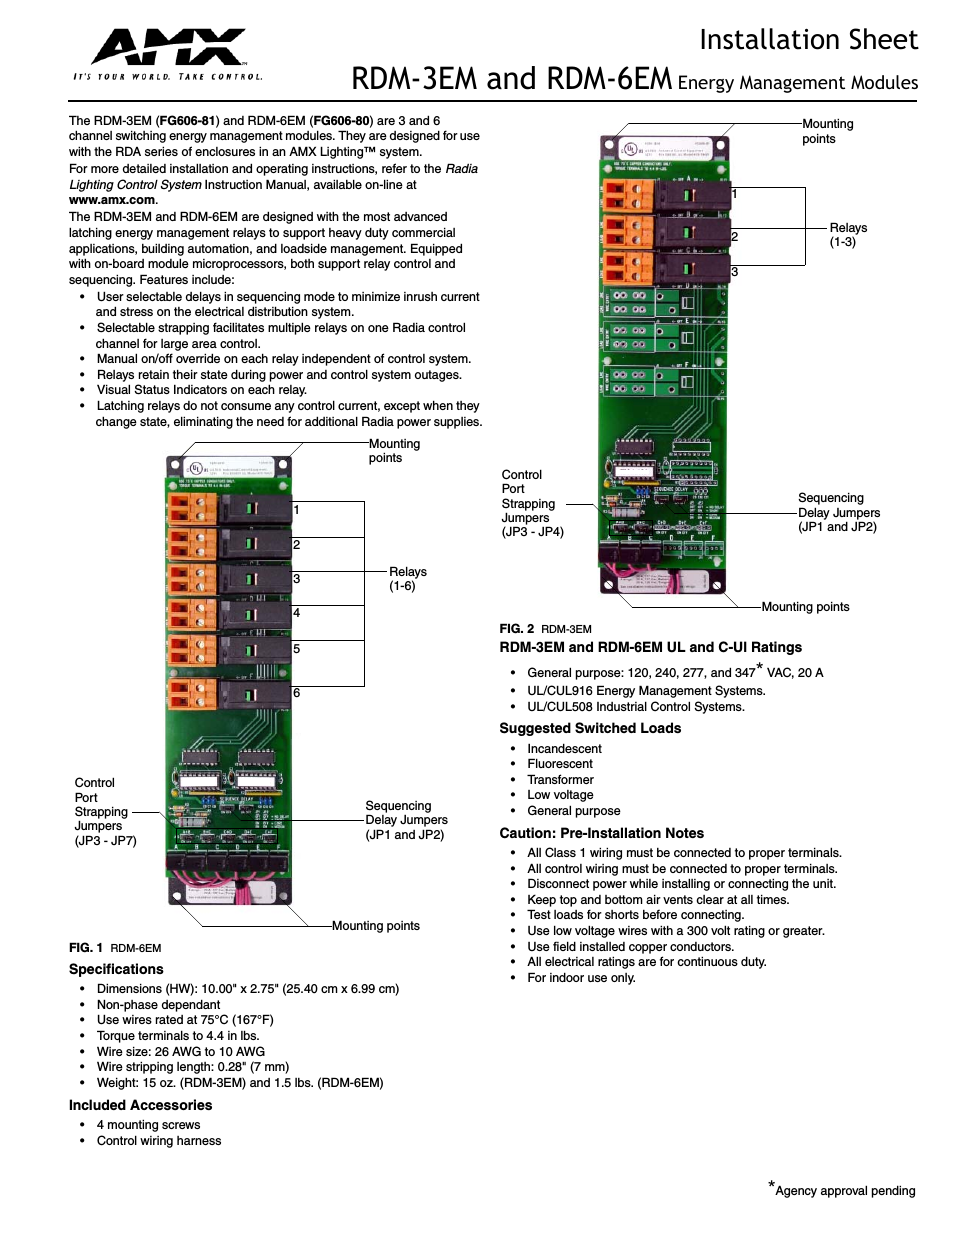 Energy Management Modules RDM-3EM